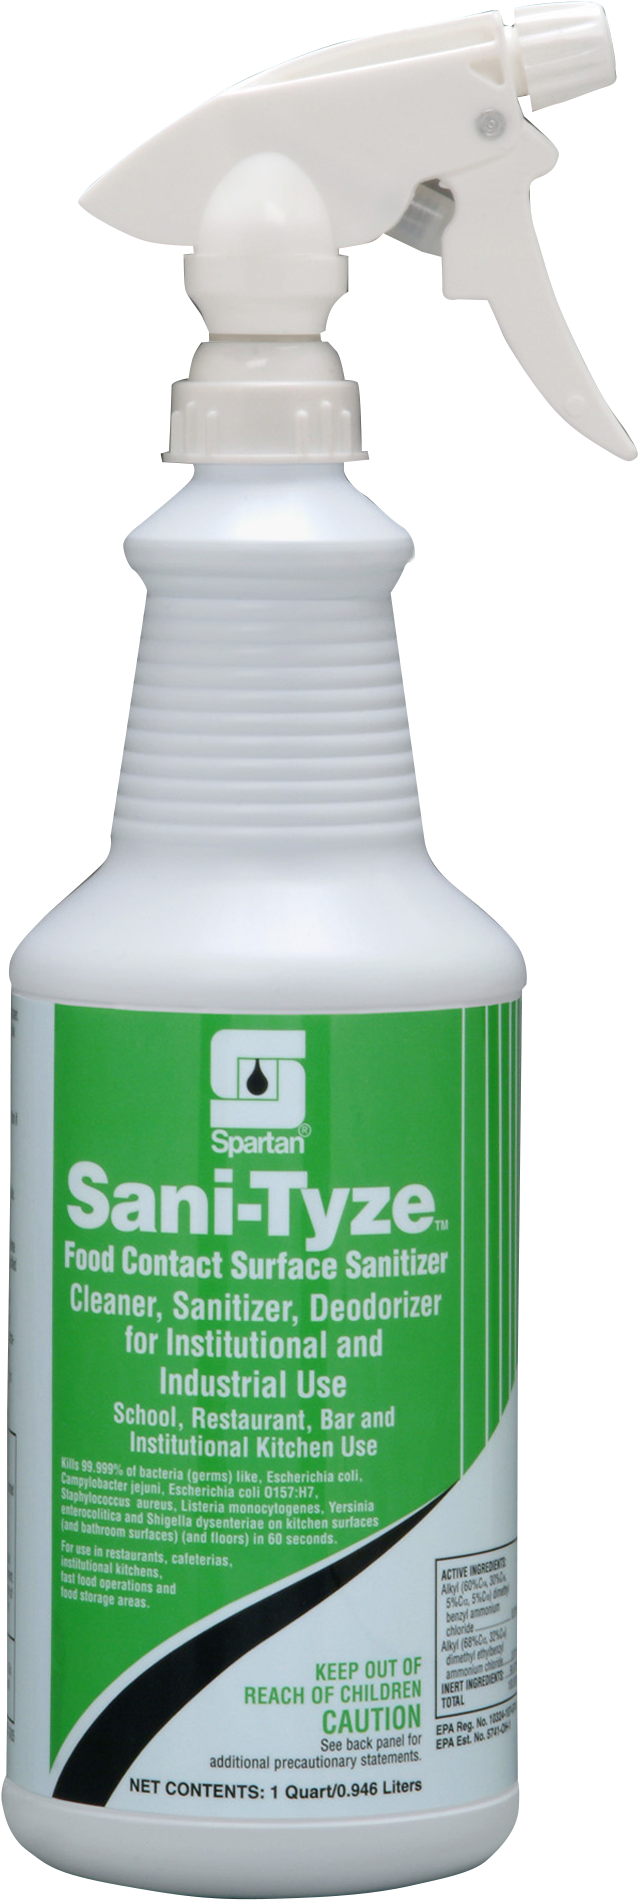 319503 Sani-tyze Copy - Spartan Sani-tyze Food Contact Surface Sanitizer 1 (1570x2197), Png Download